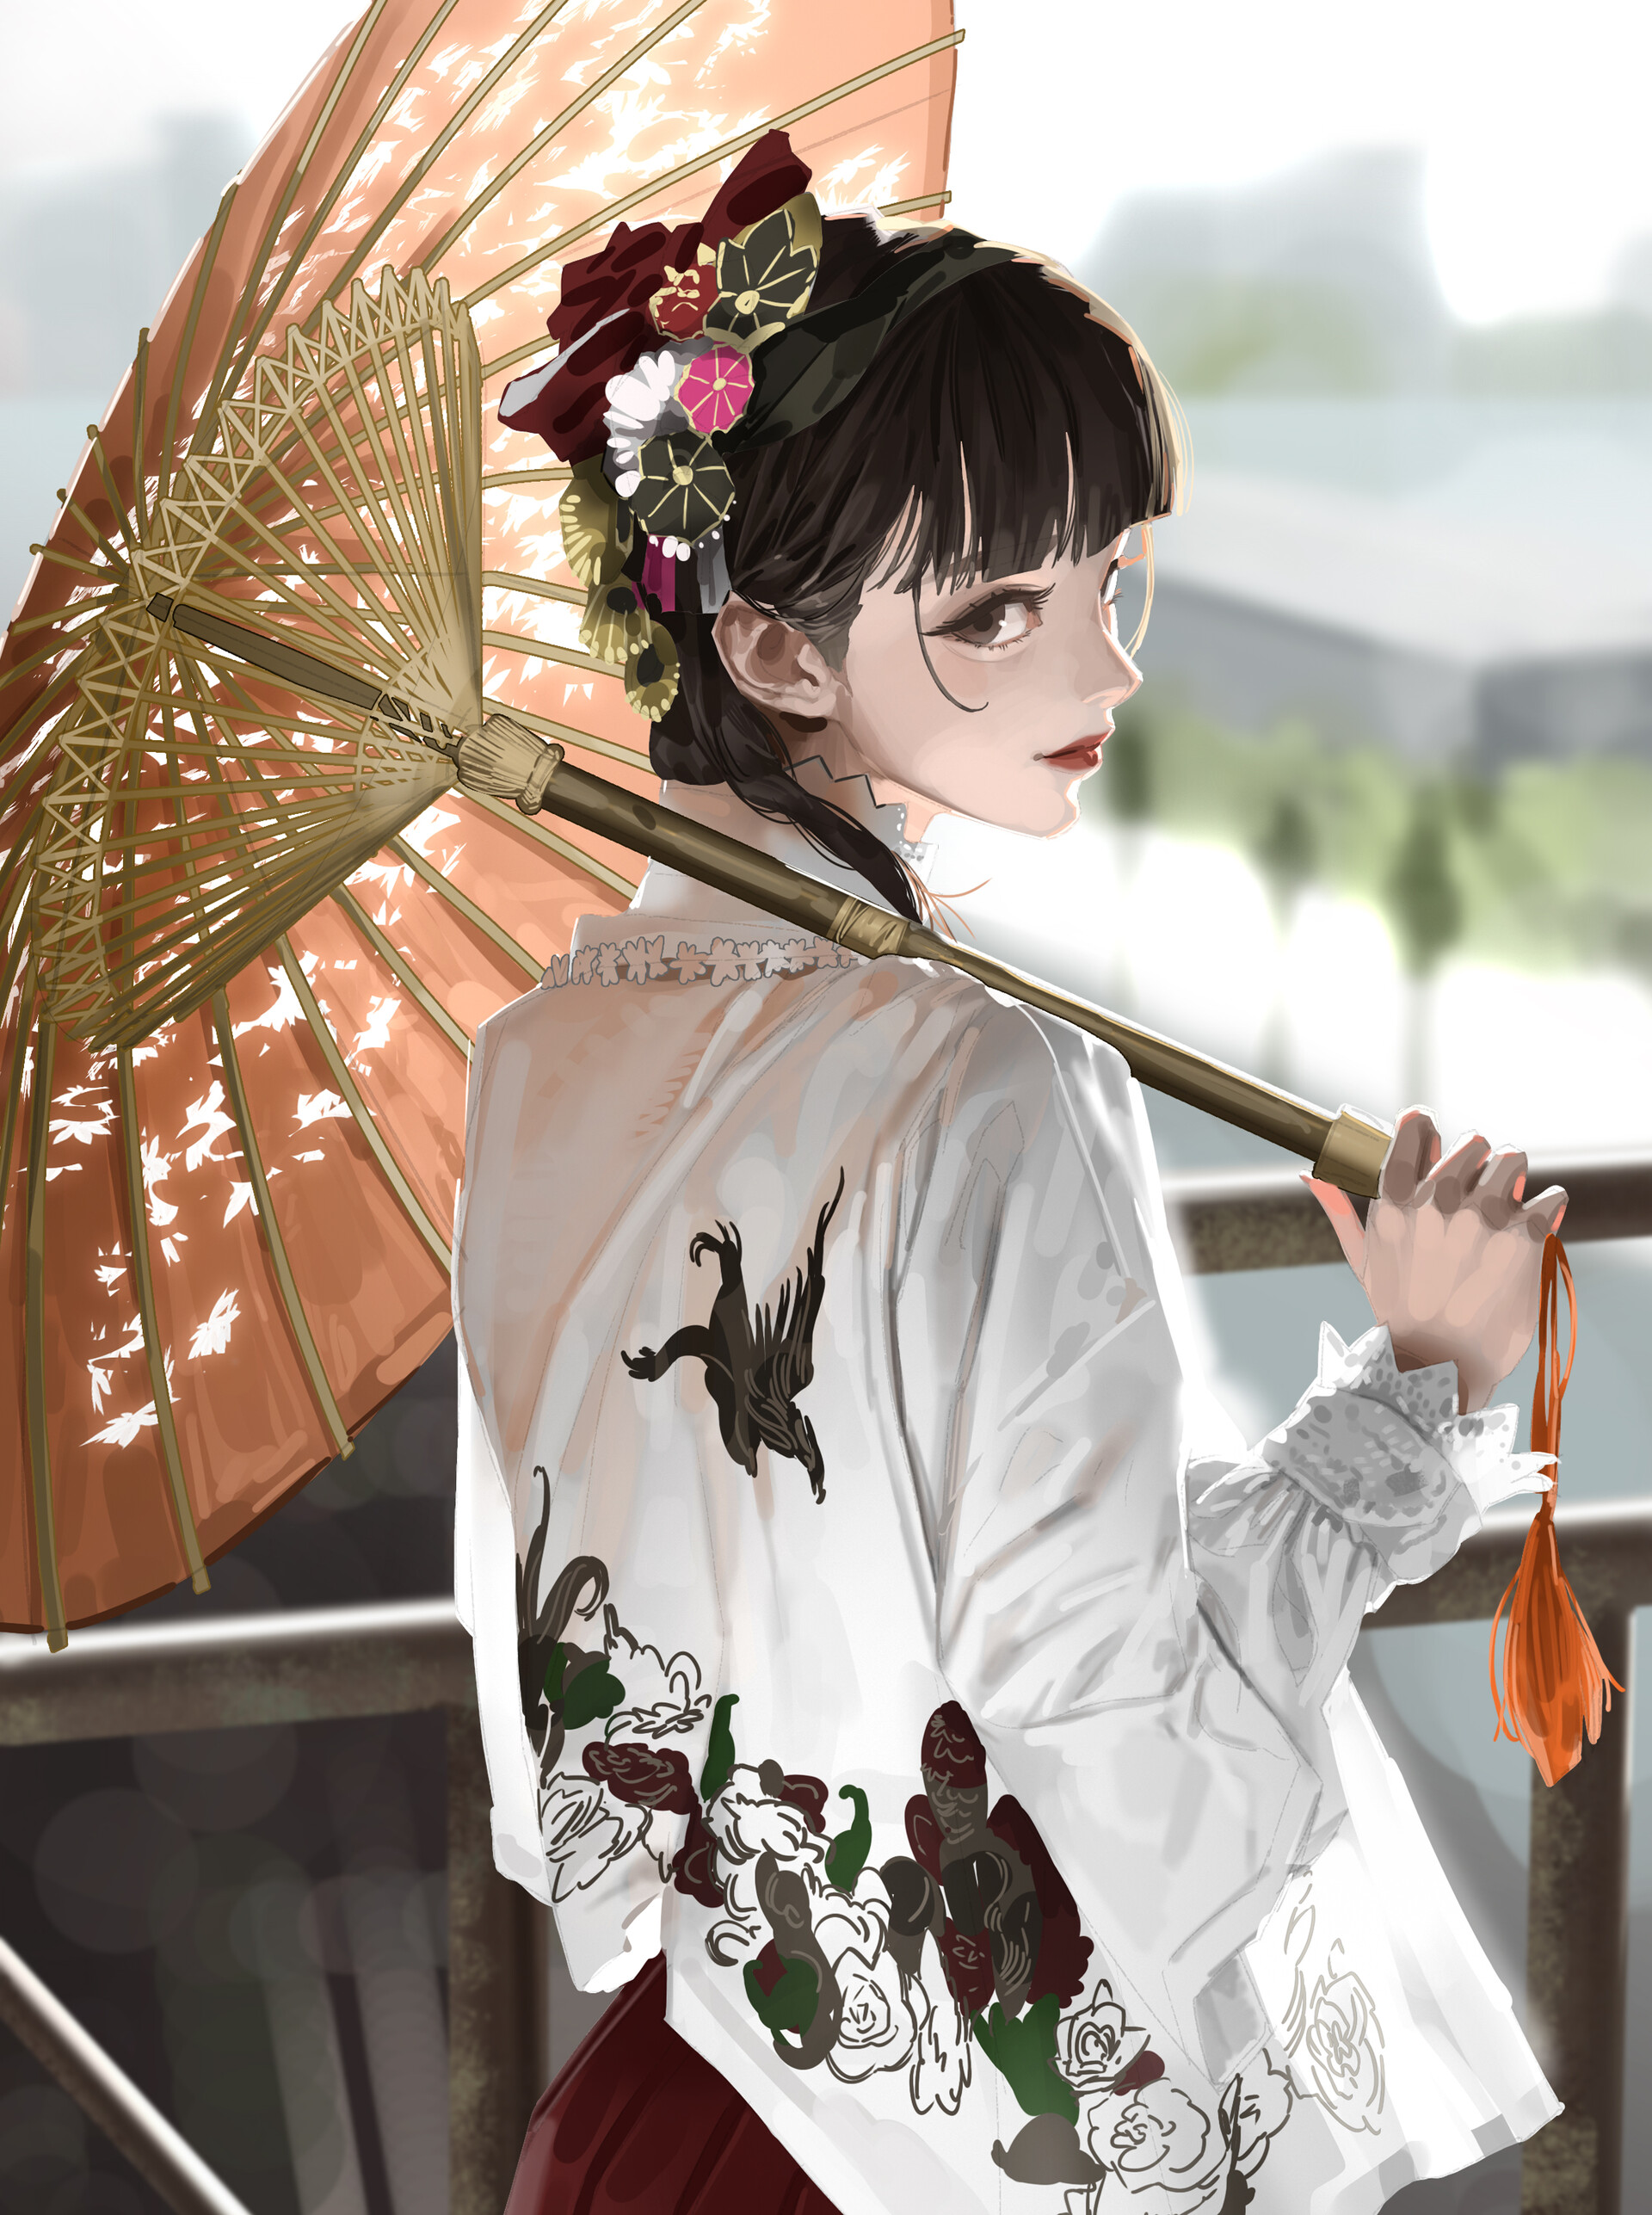 General 1920x2574 digital art artwork illustration women portrait umbrella kimono Asian dark hair short hair